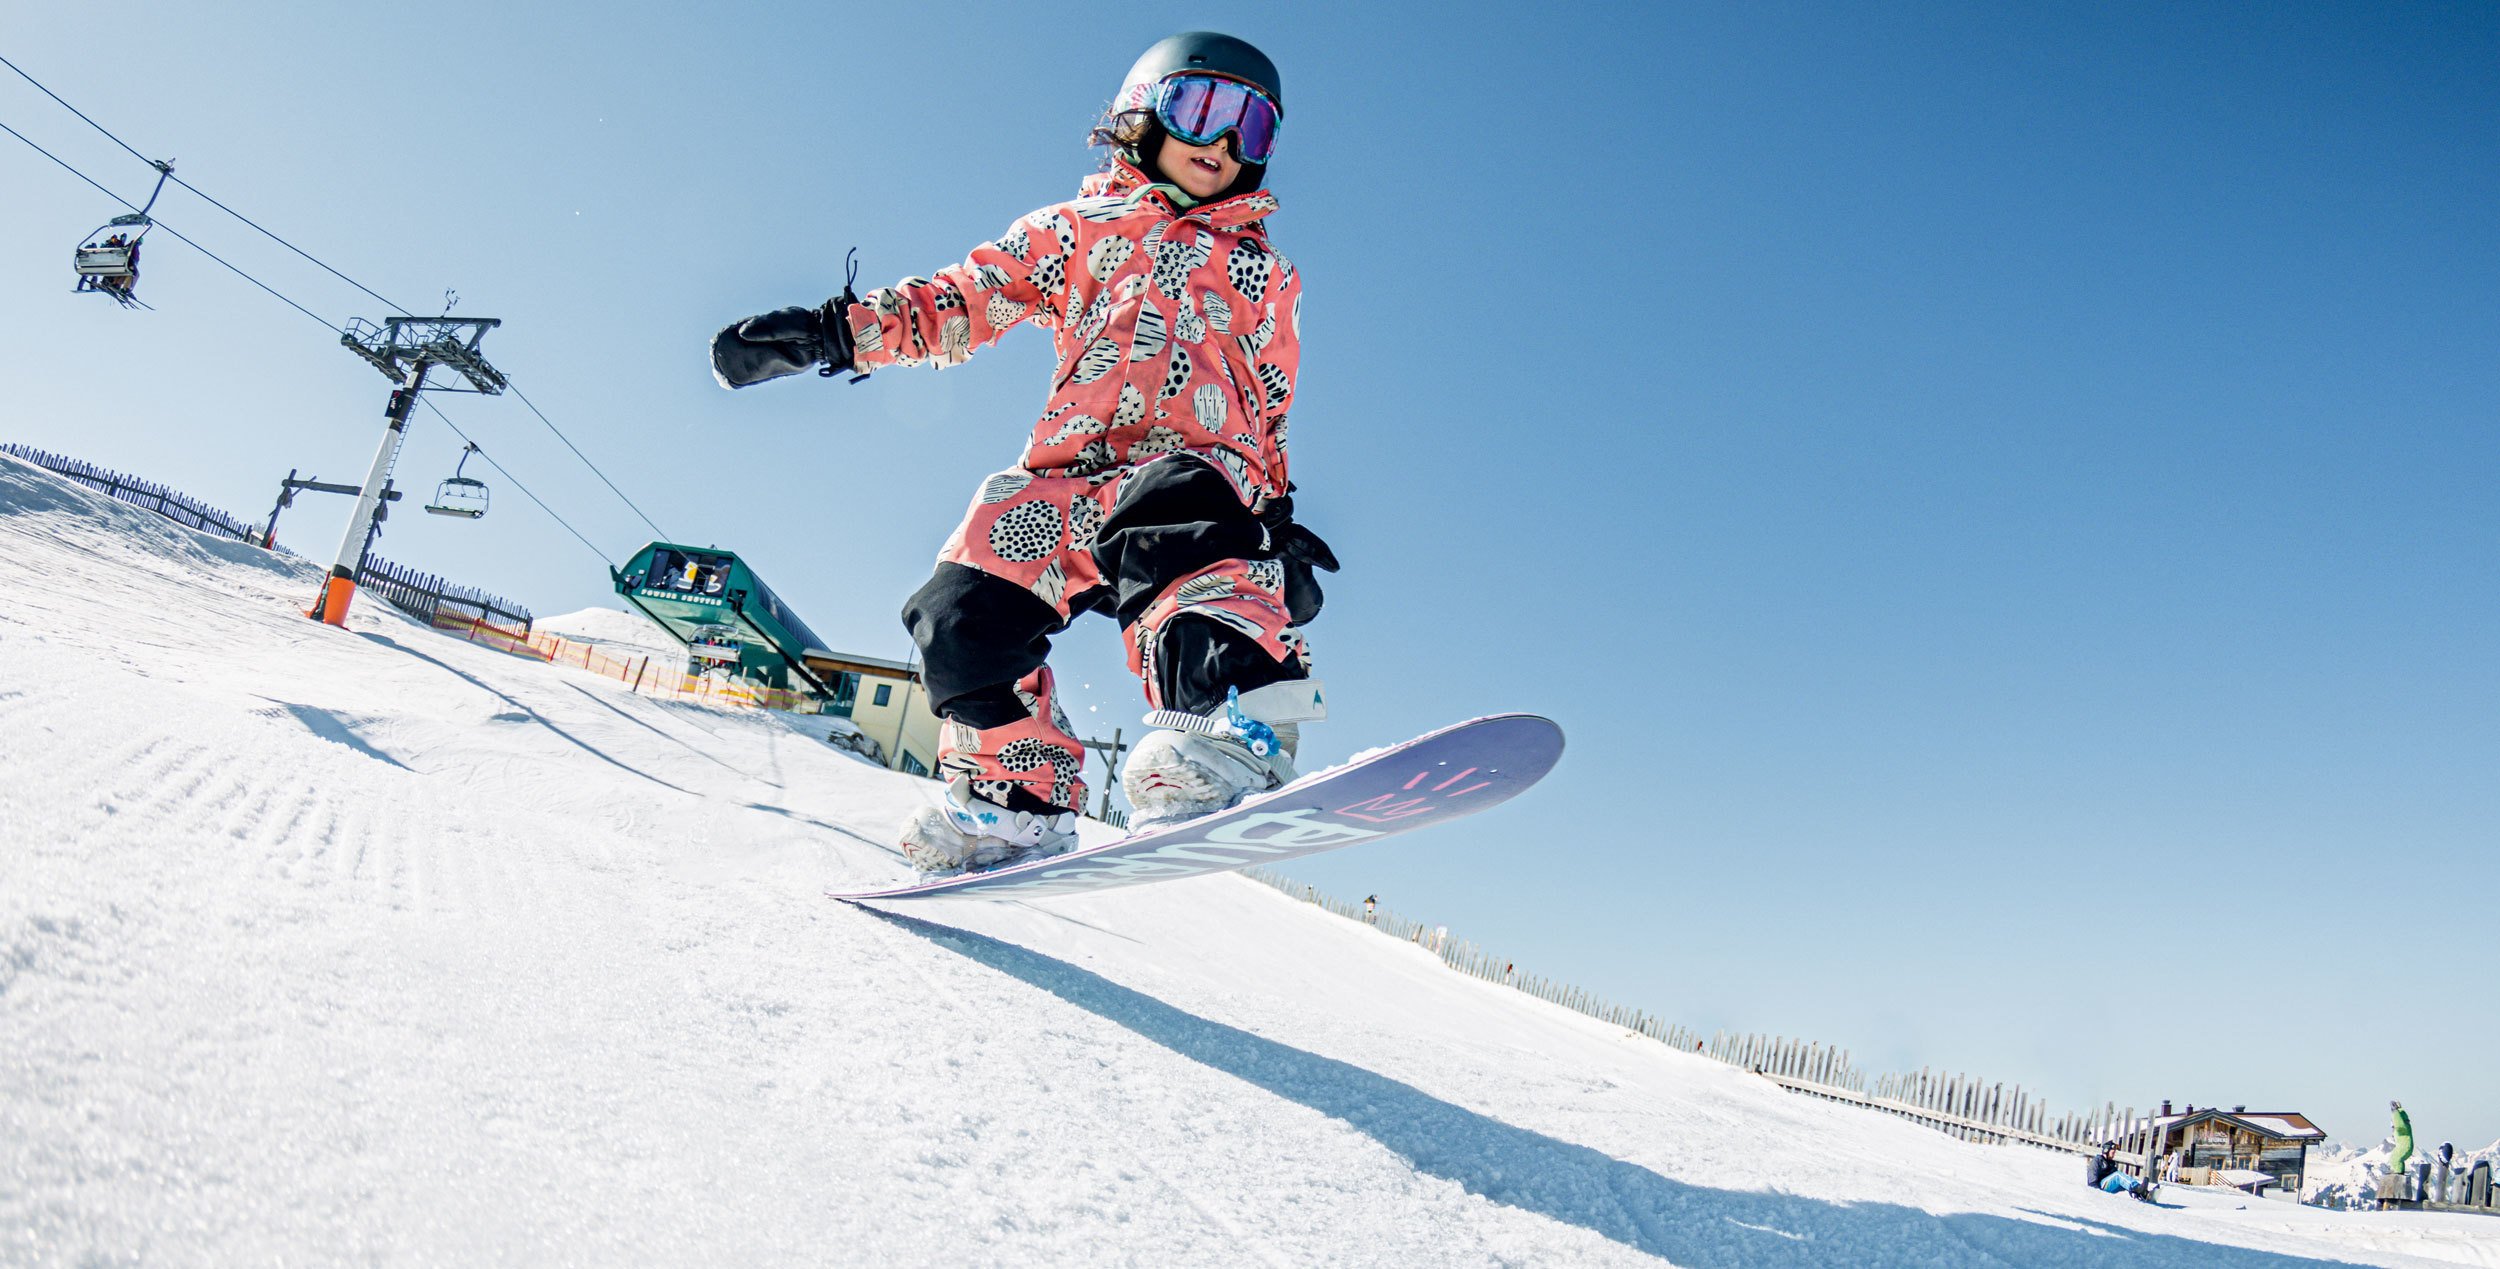 trick on snowboard